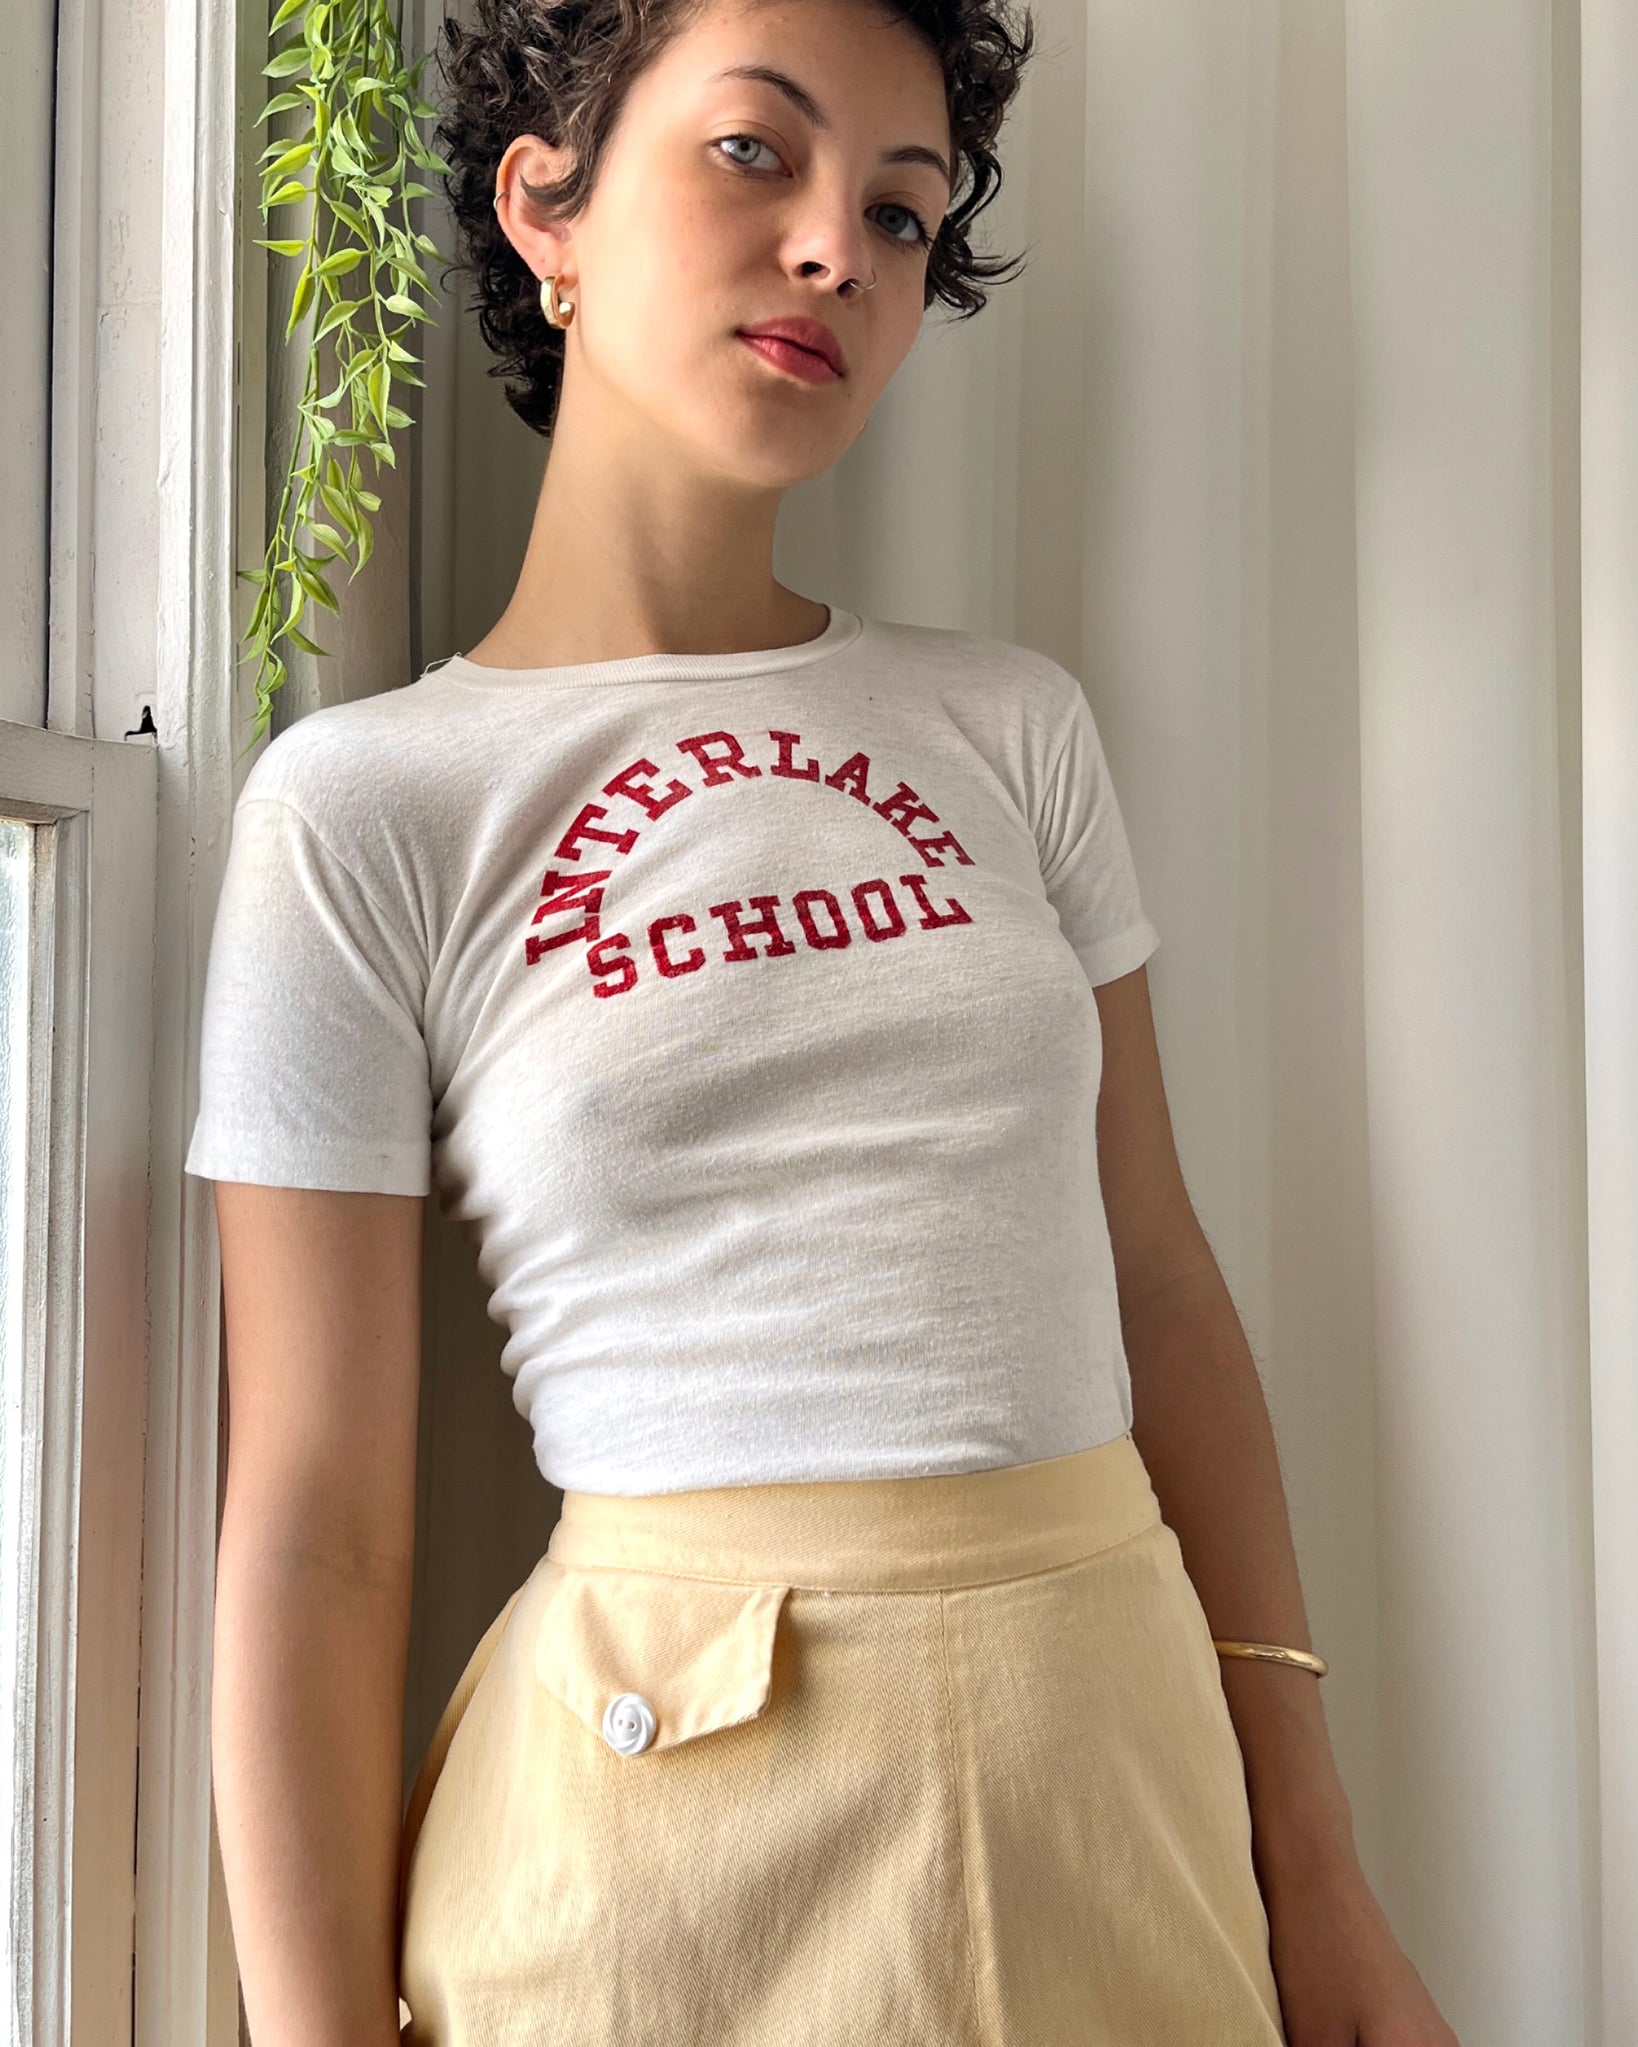 Royce Apparel Lucky Girl University Vintage Short Sleeve T-Shirt